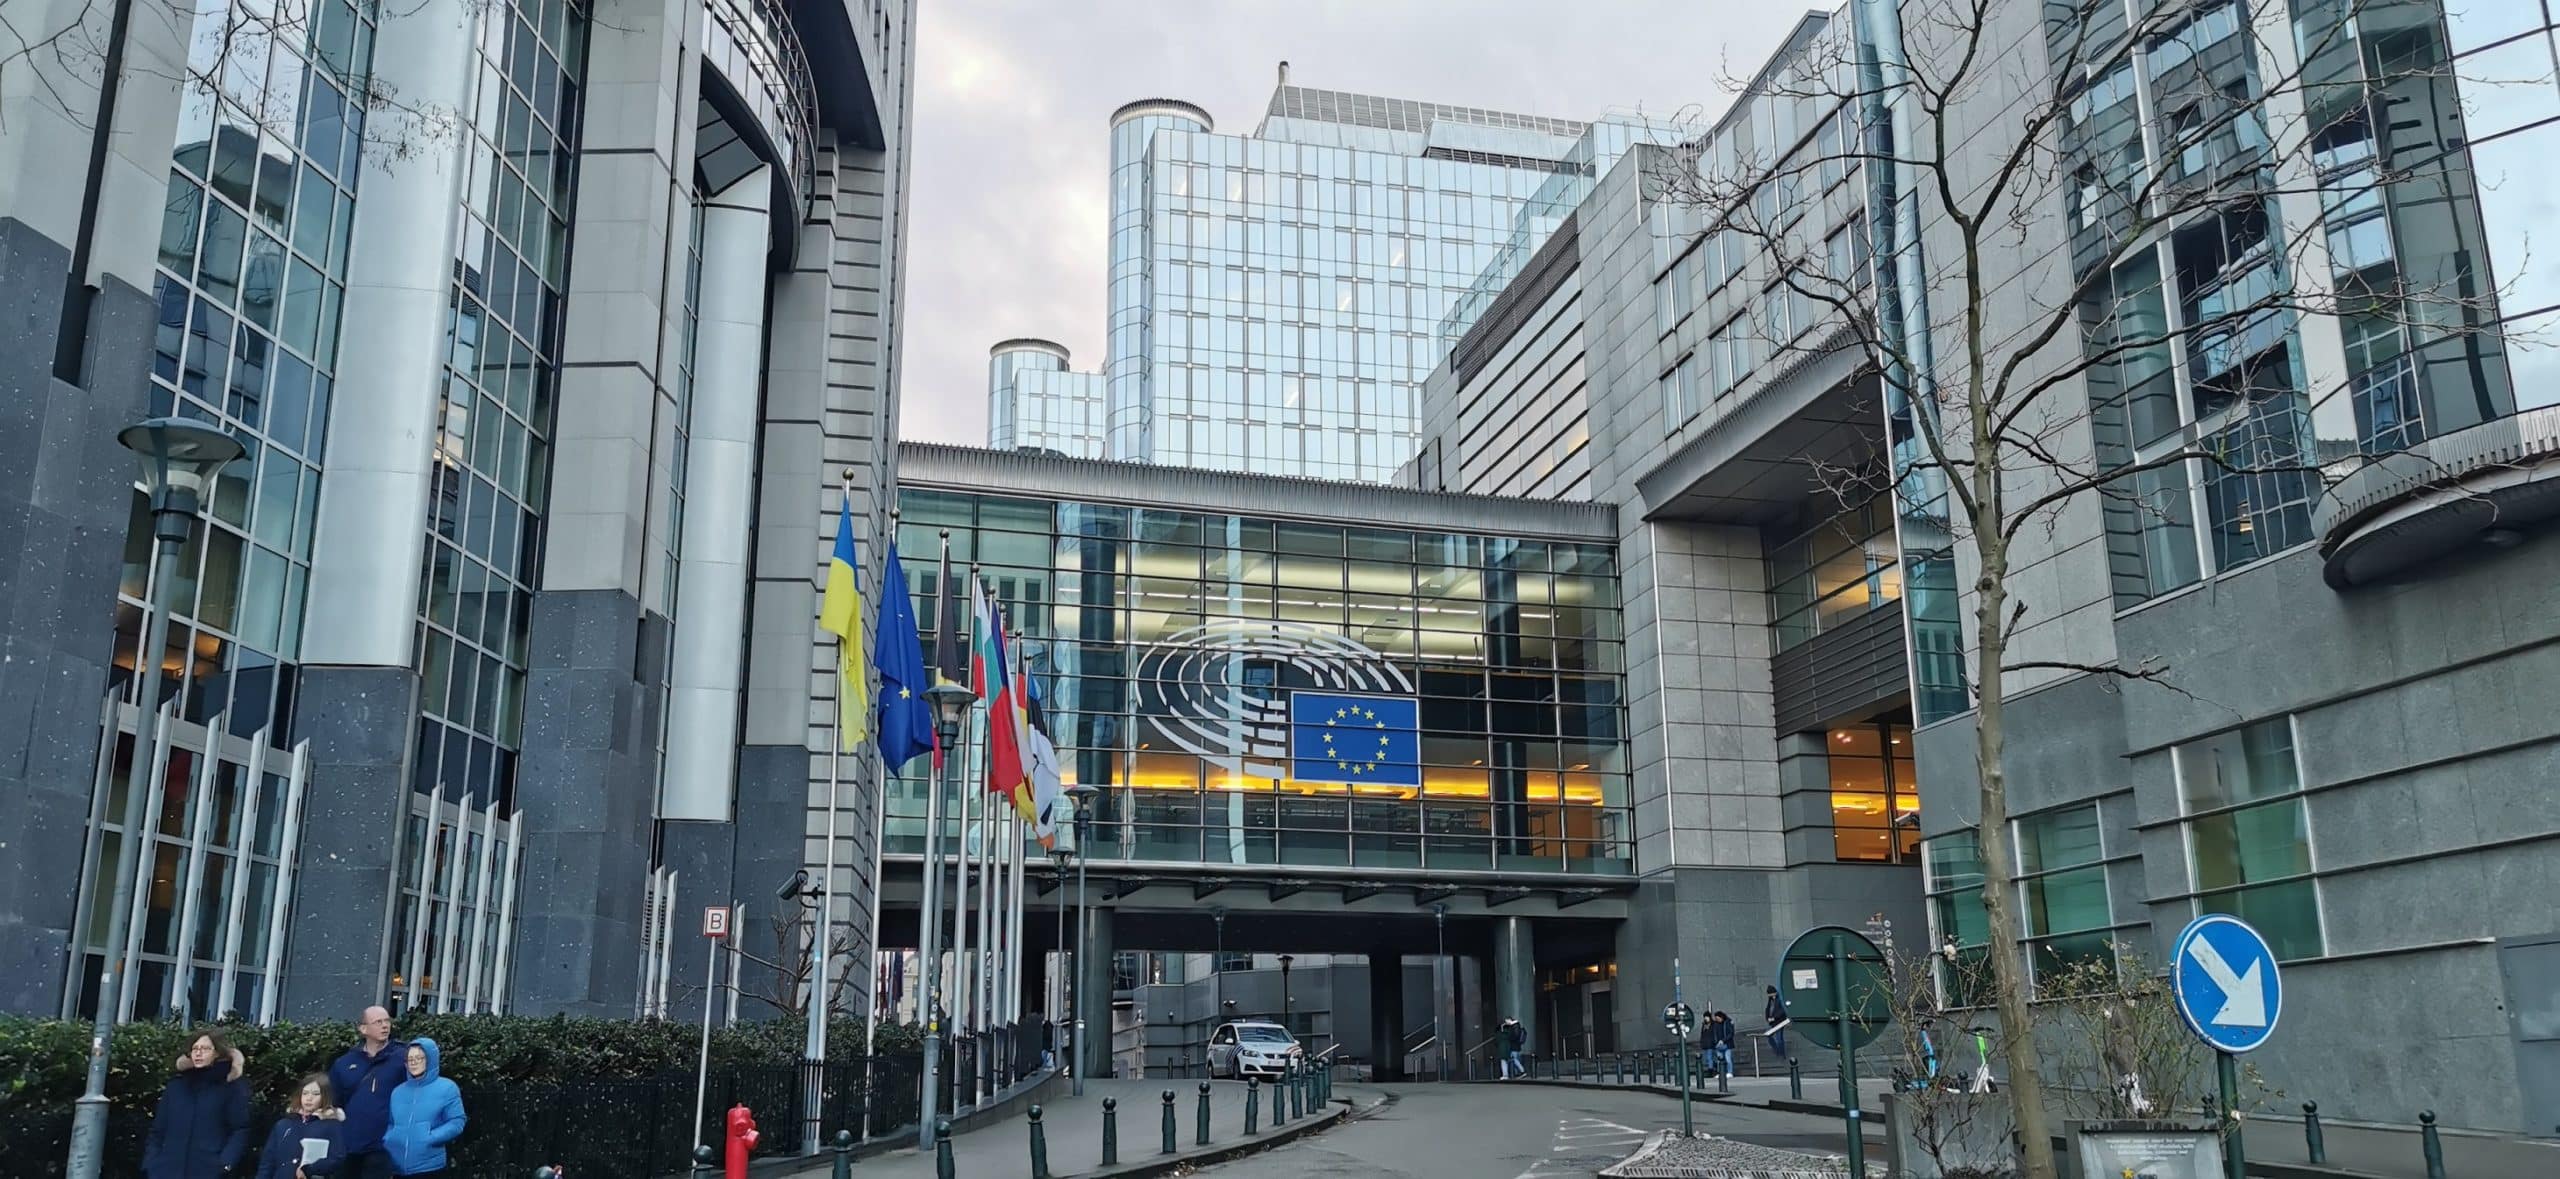 The Qatargate bribery and corruption scandal has shaken the European Parliament